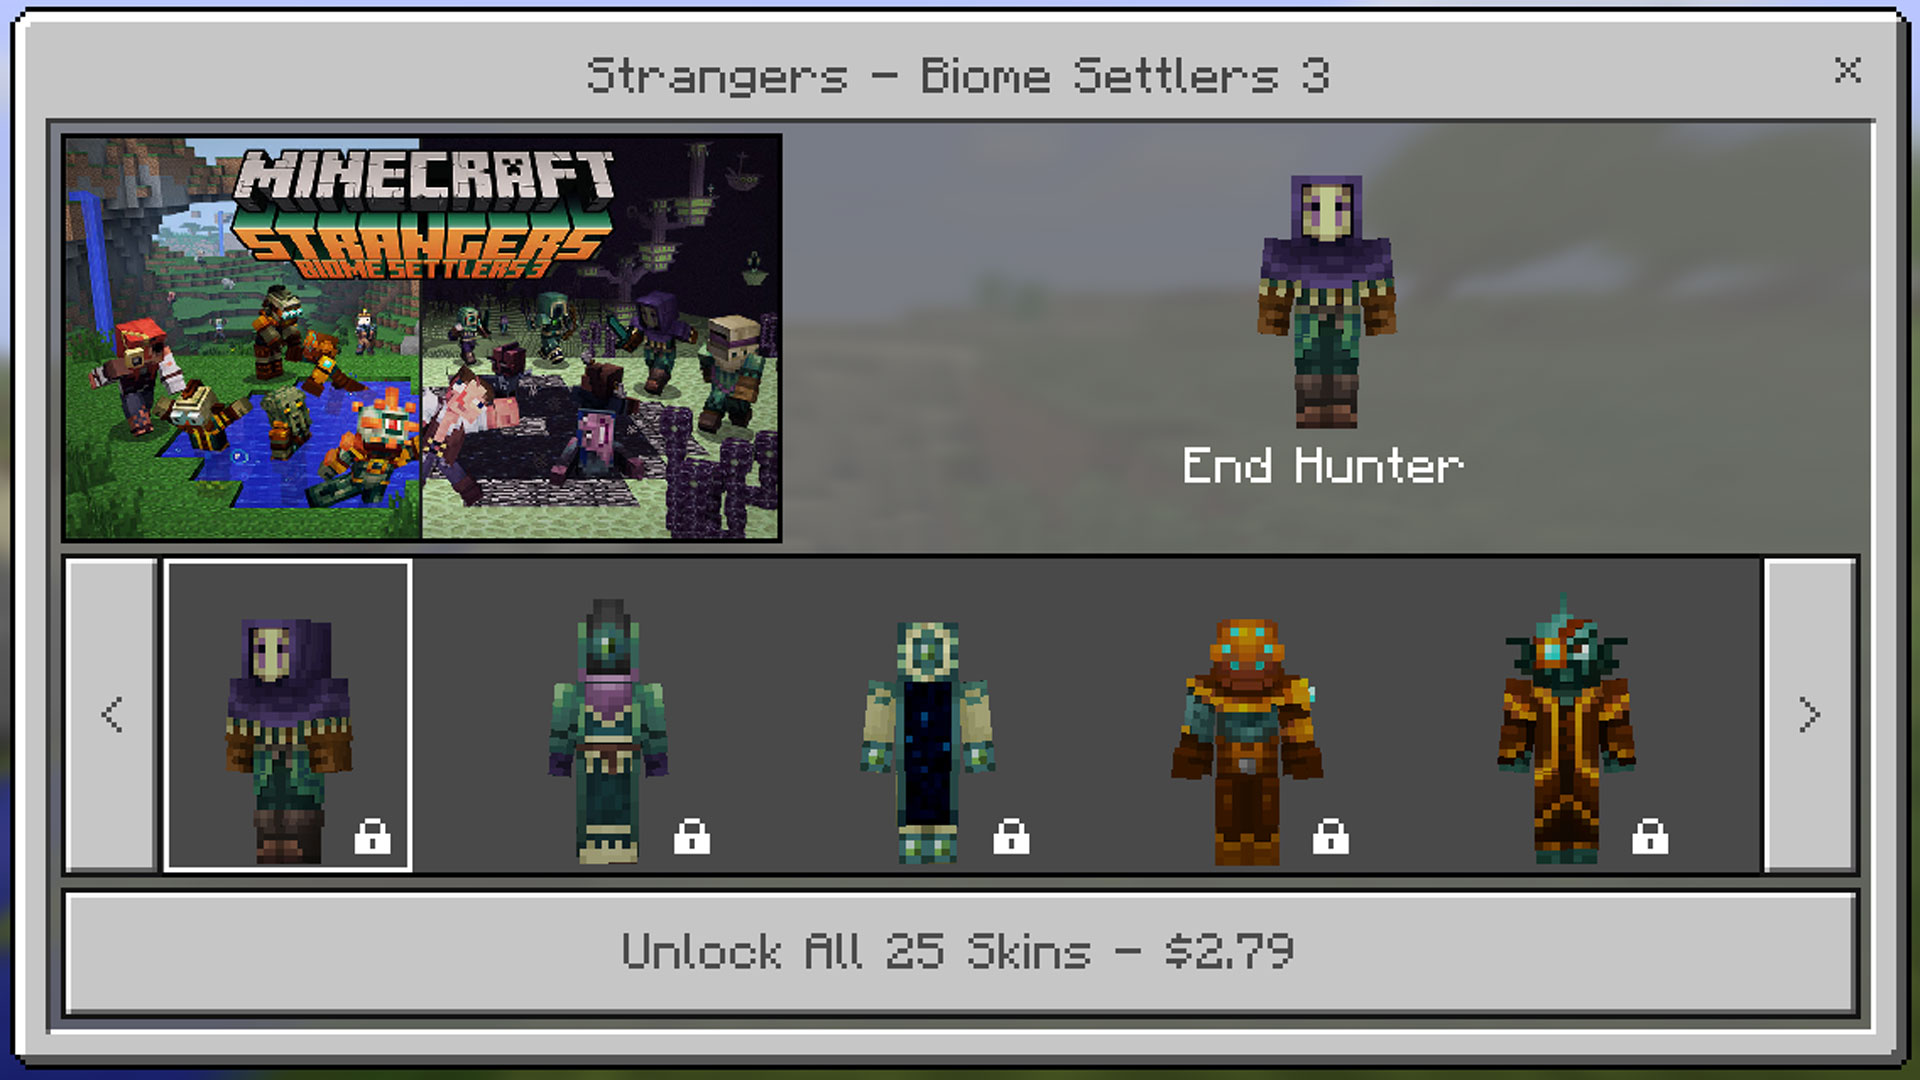 Minecraft Pocket Edition: Biome Settlers 3 Strangers Skin Pack